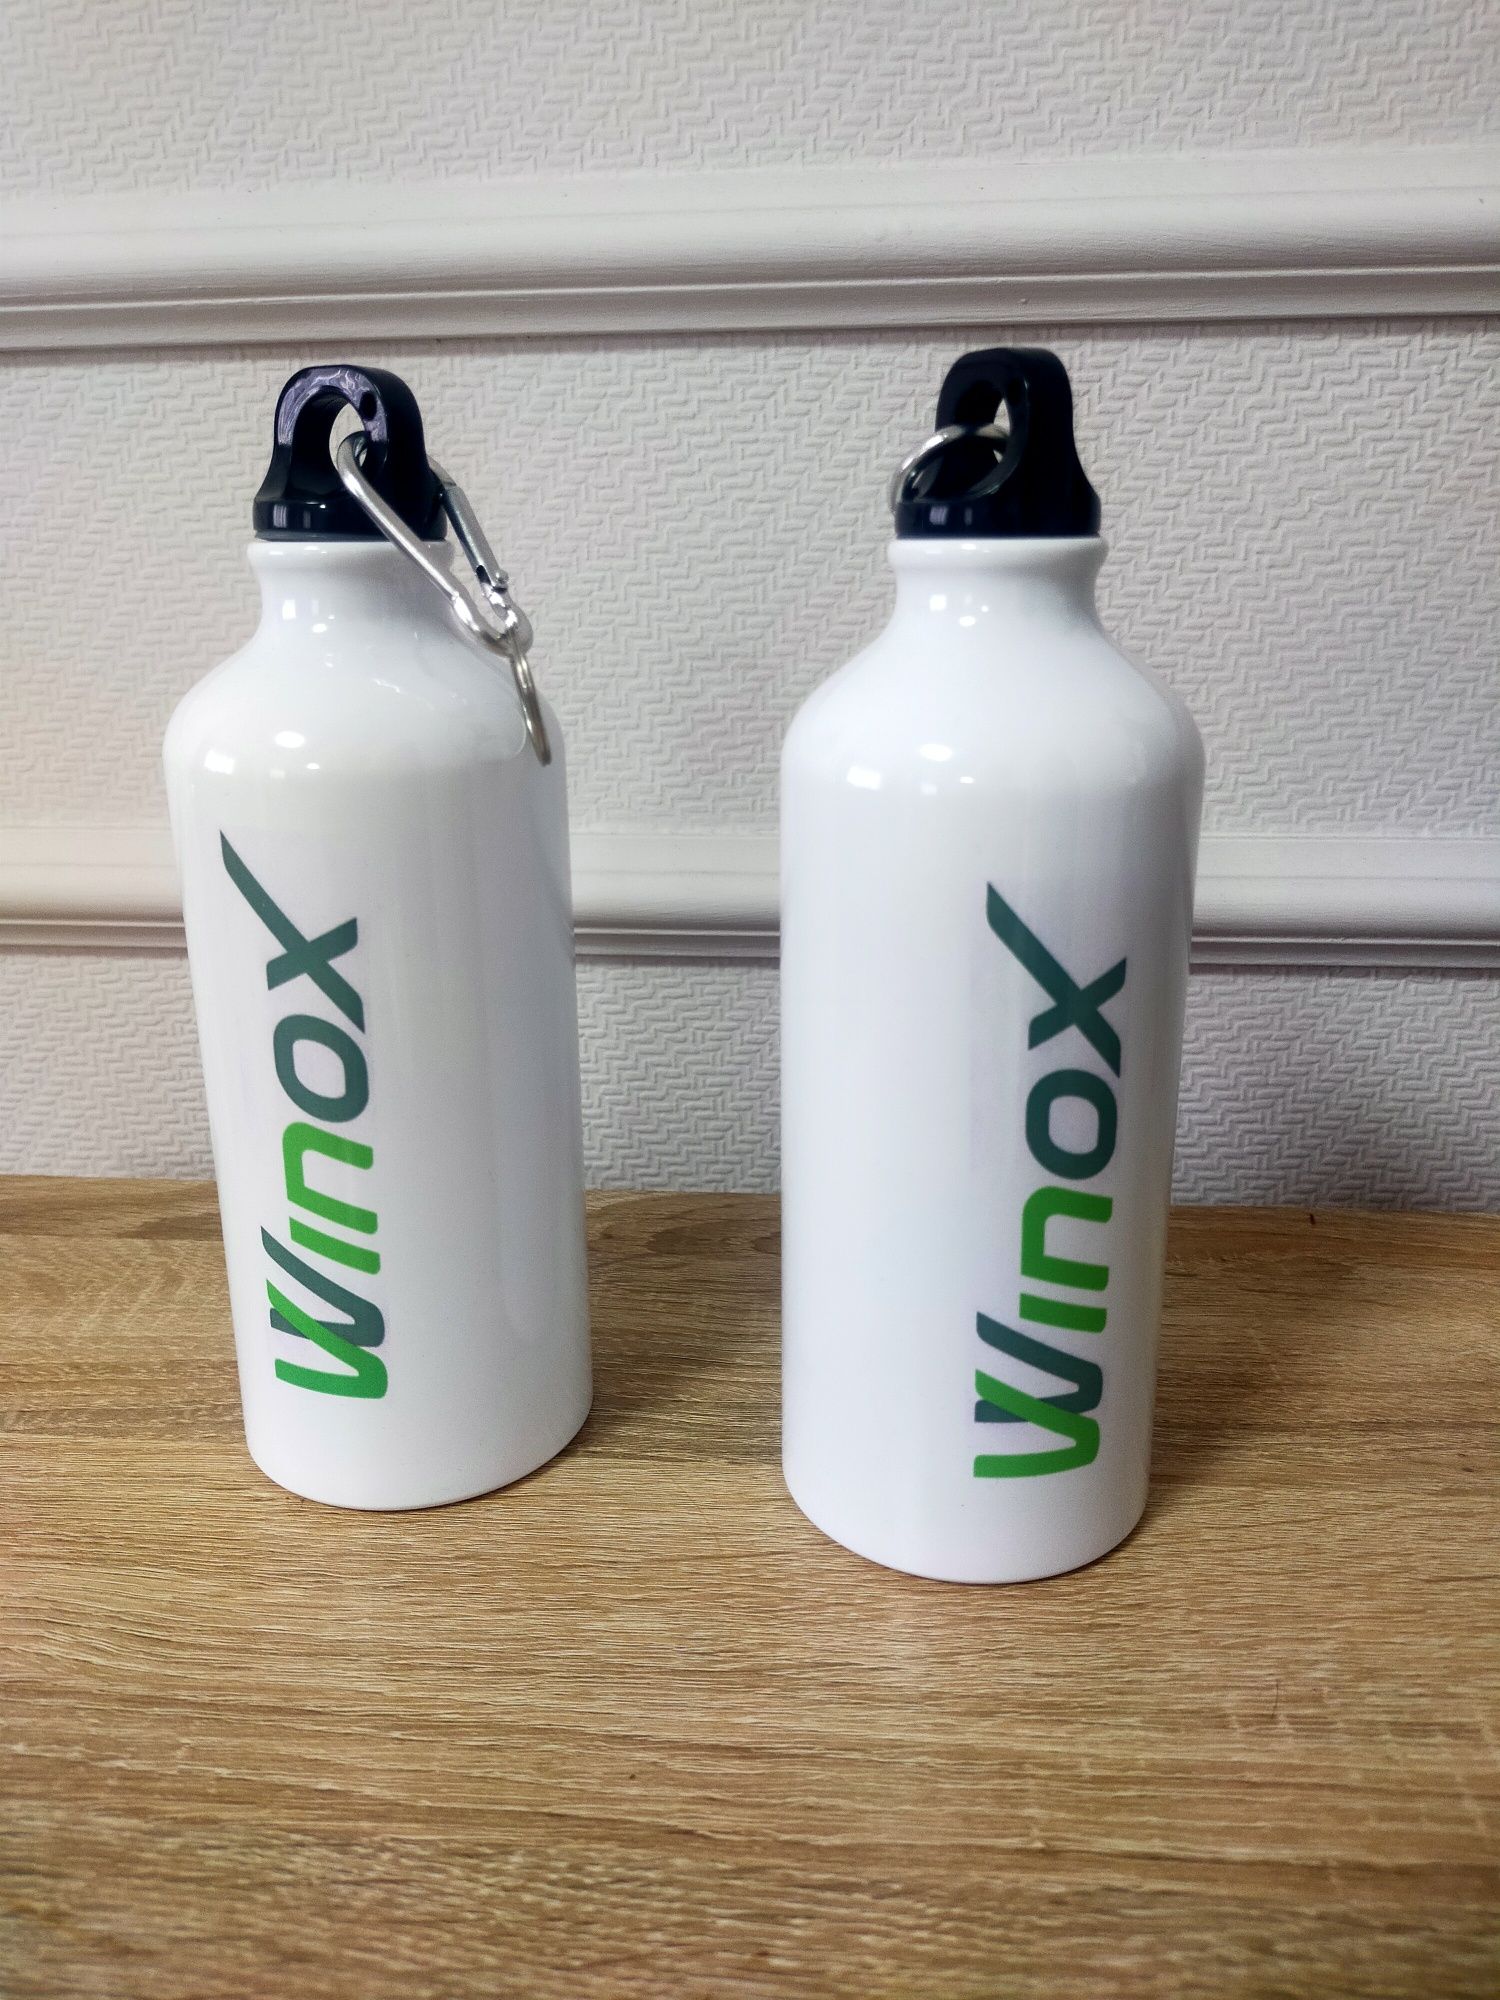 Срочно продам бутыли Winox для жидкости.